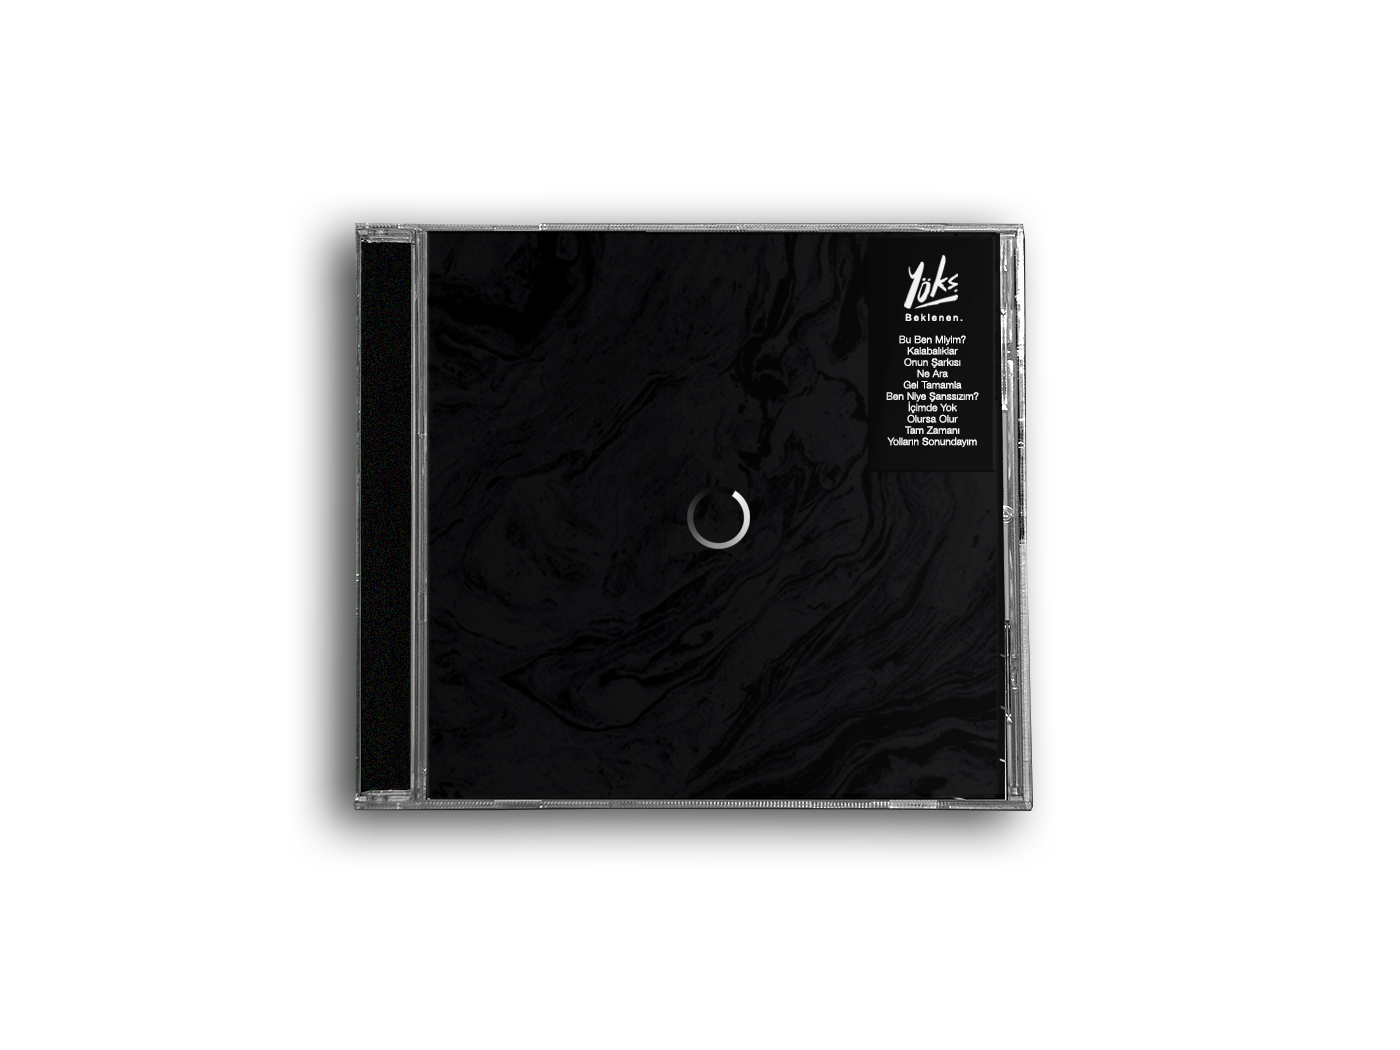 vinyl indie istanbul Sony türkiye Album design music album design Jewel Case rock band music album